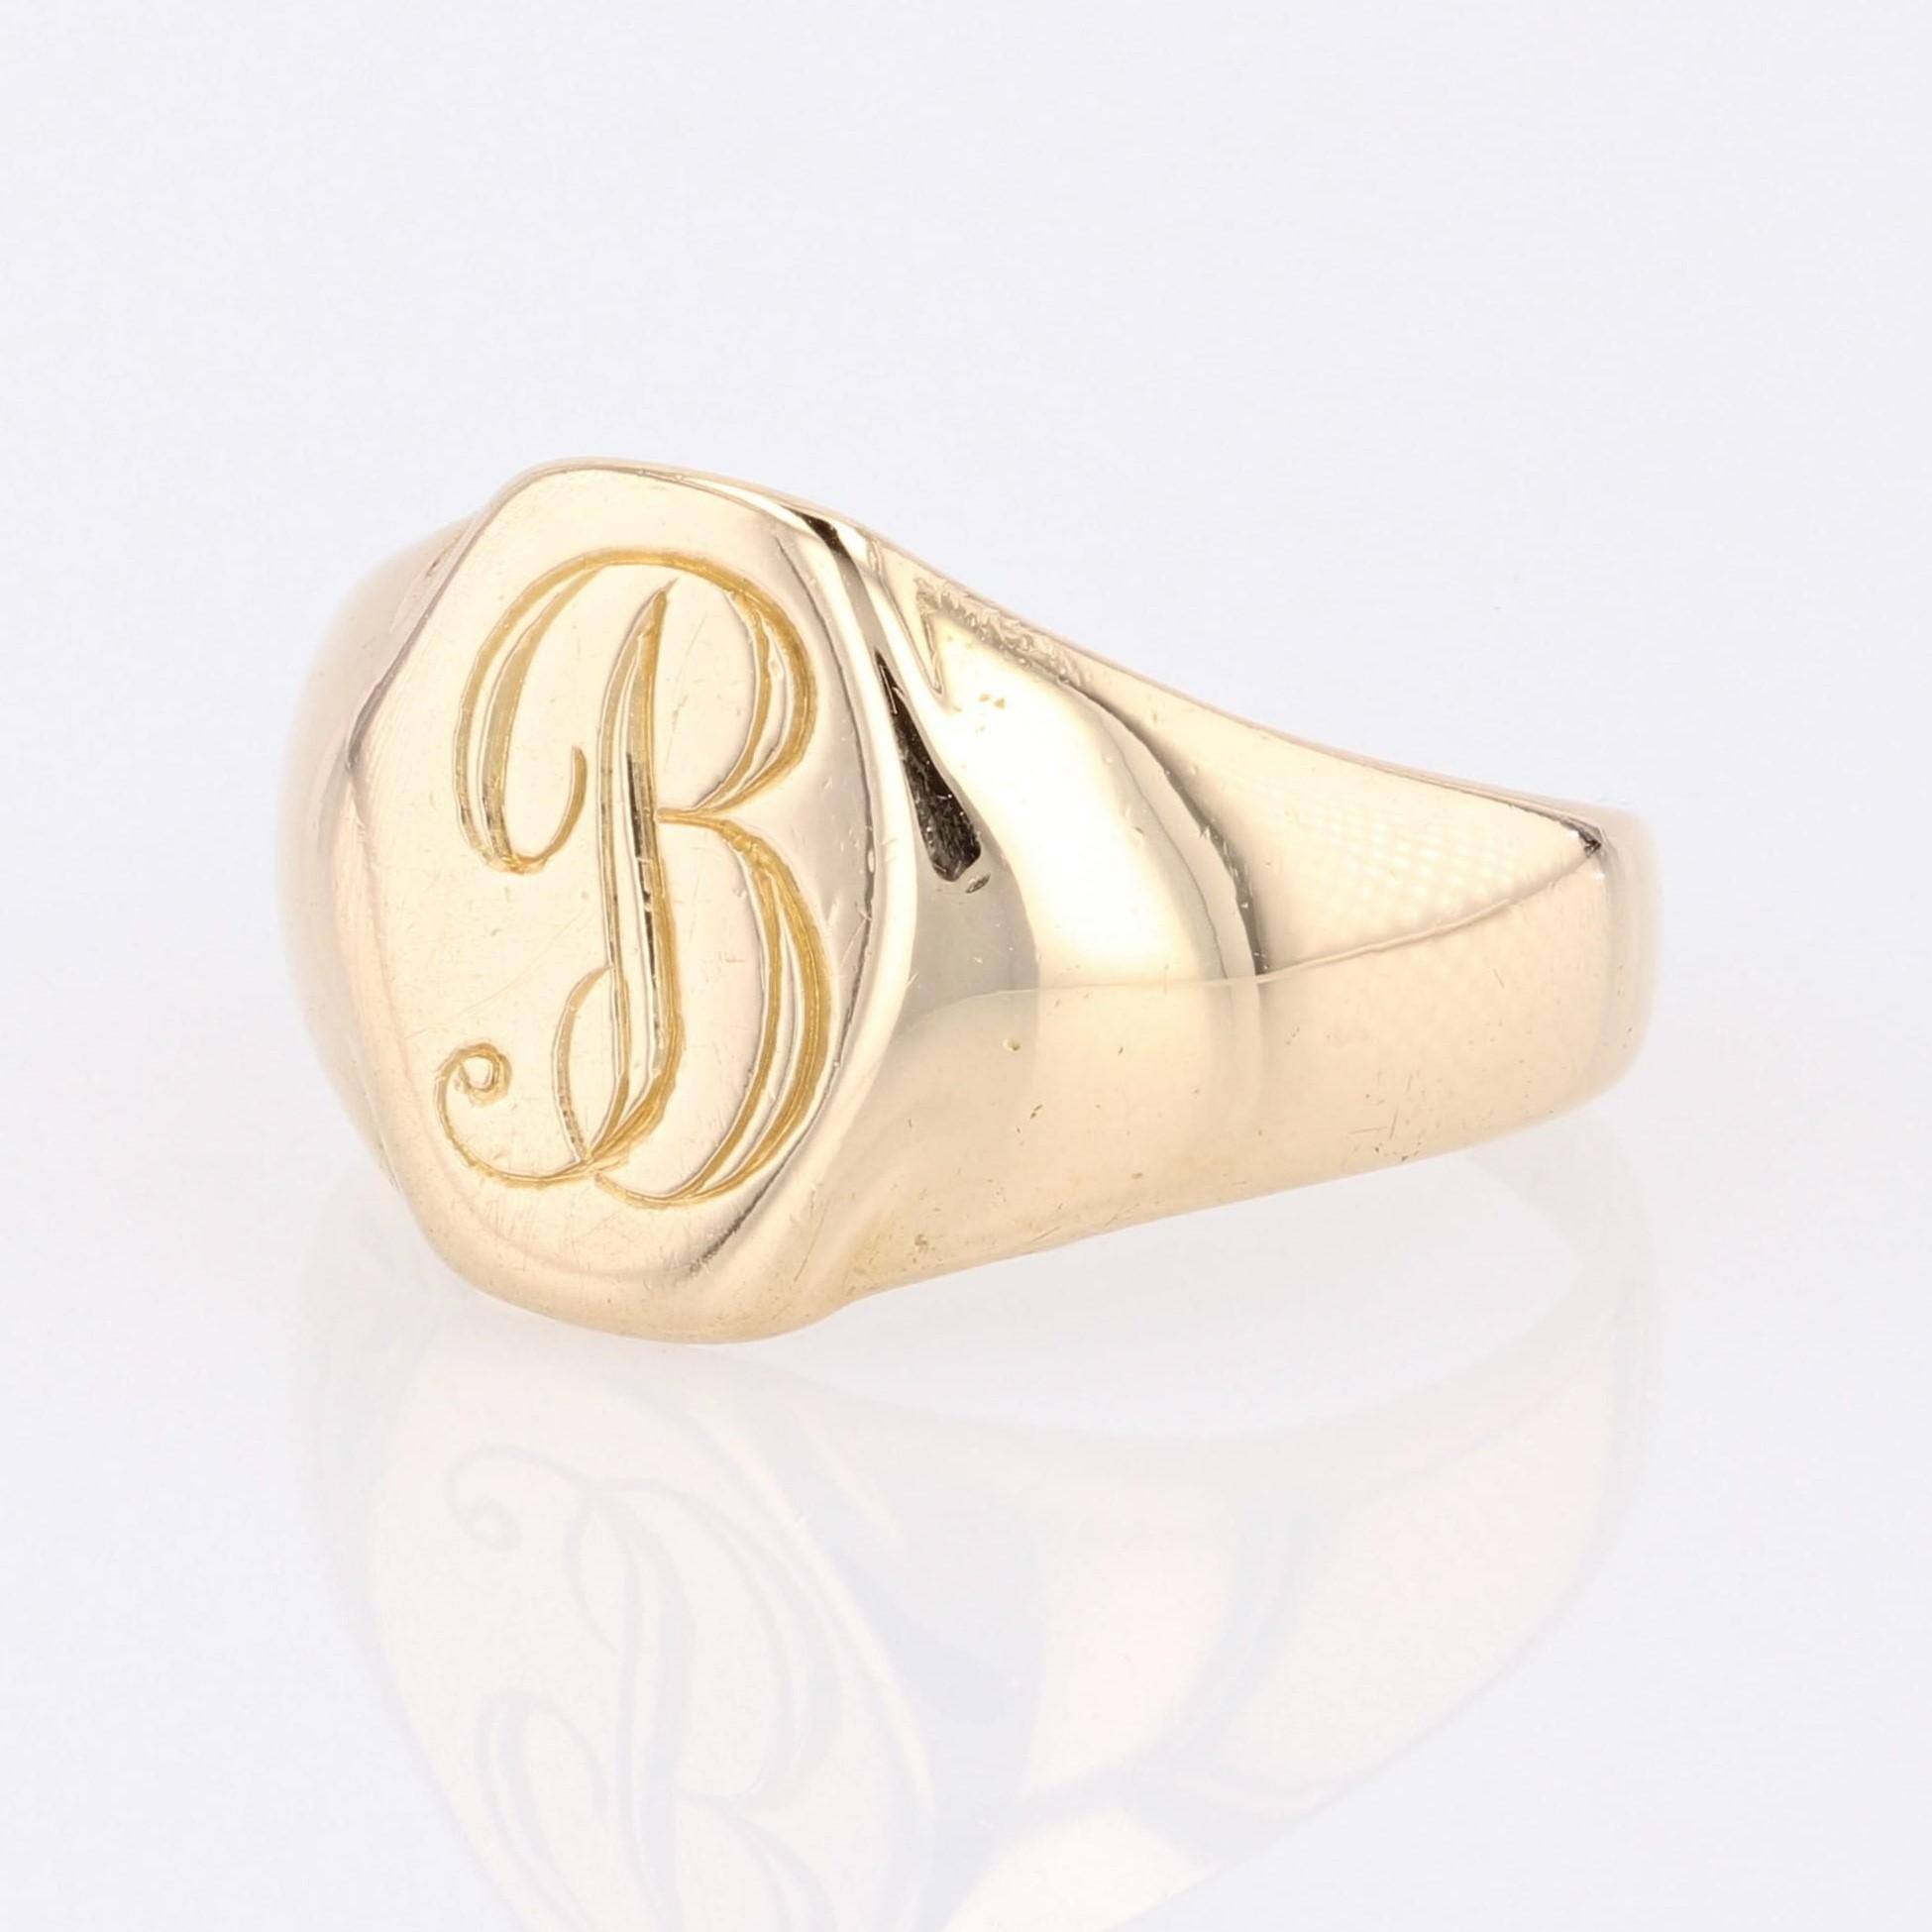 Moderne Bague signet moderne française en or jaune 18 carats avec lettres B en vente